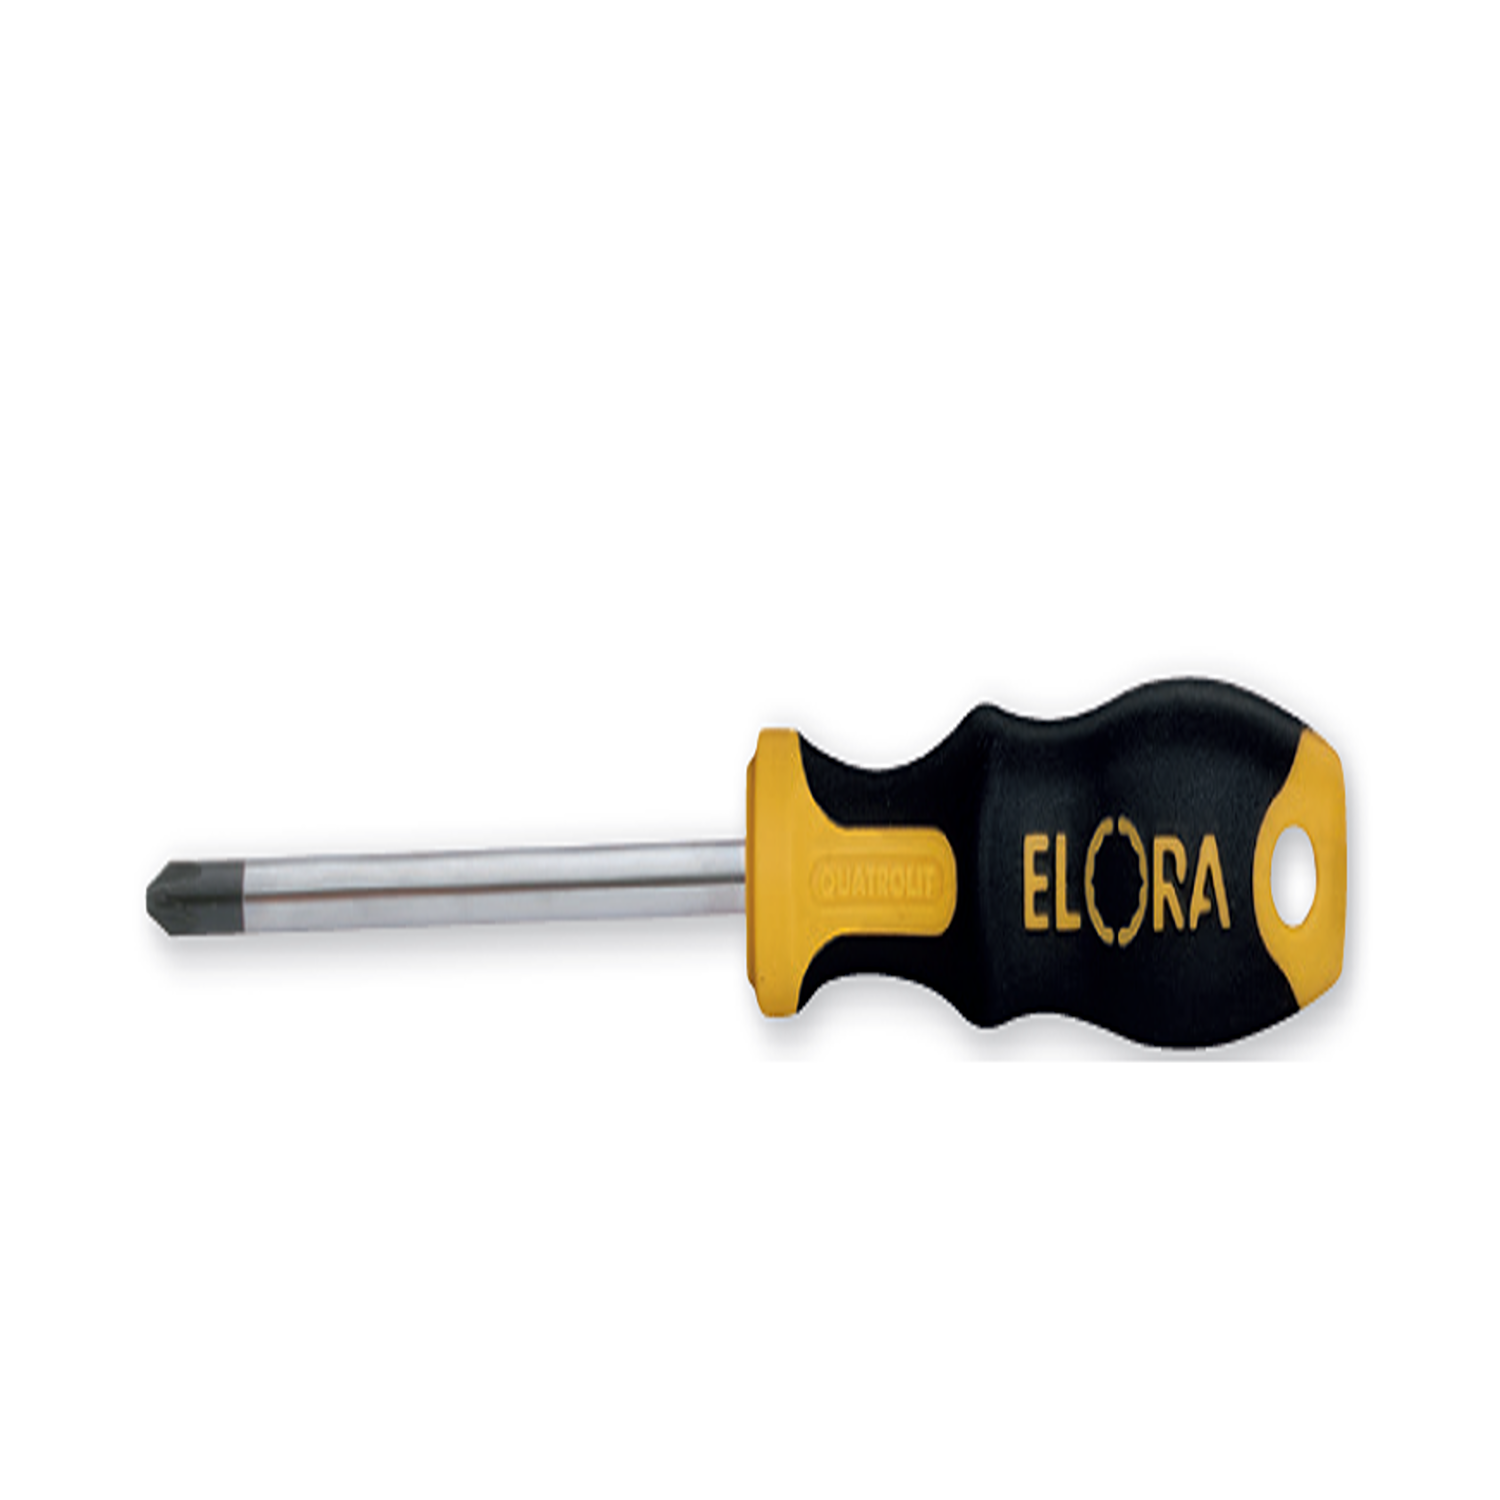 ELORA 547-PH Screwdriver for Cross Slotted Screws (ELORA Tools) - Premium Screwdriver from ELORA - Shop now at Yew Aik.